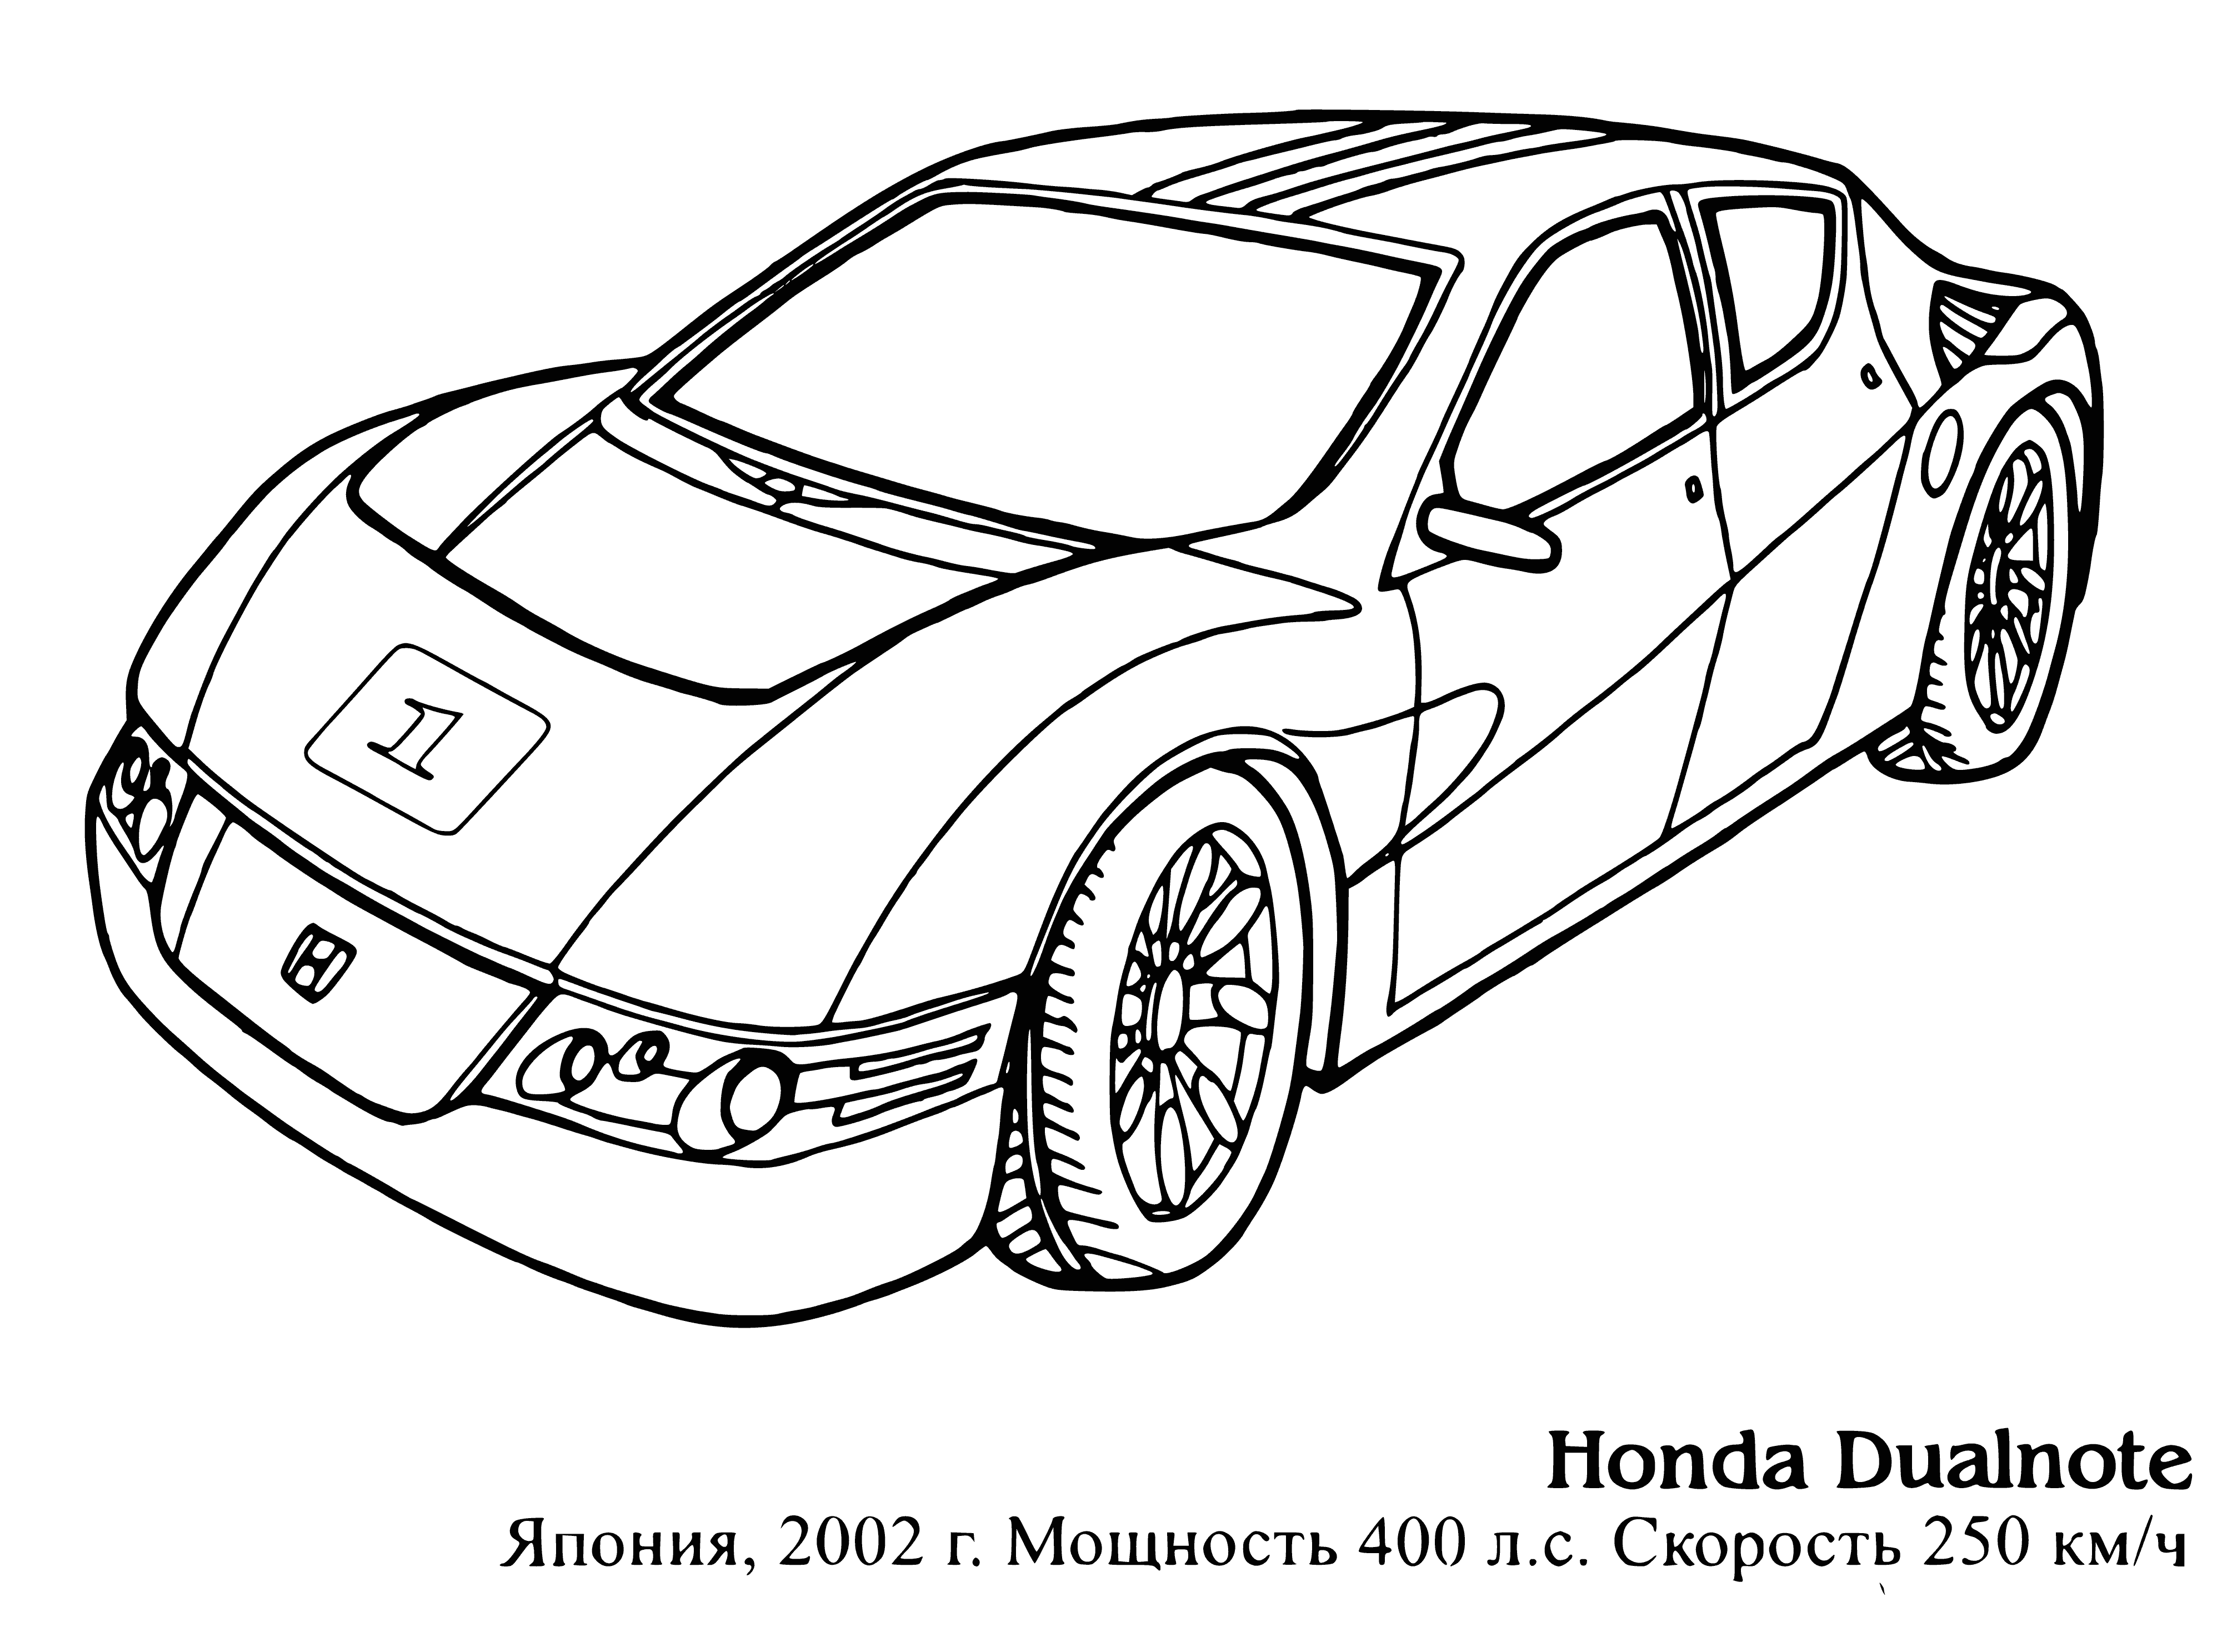 Honda Dualnote coloring page